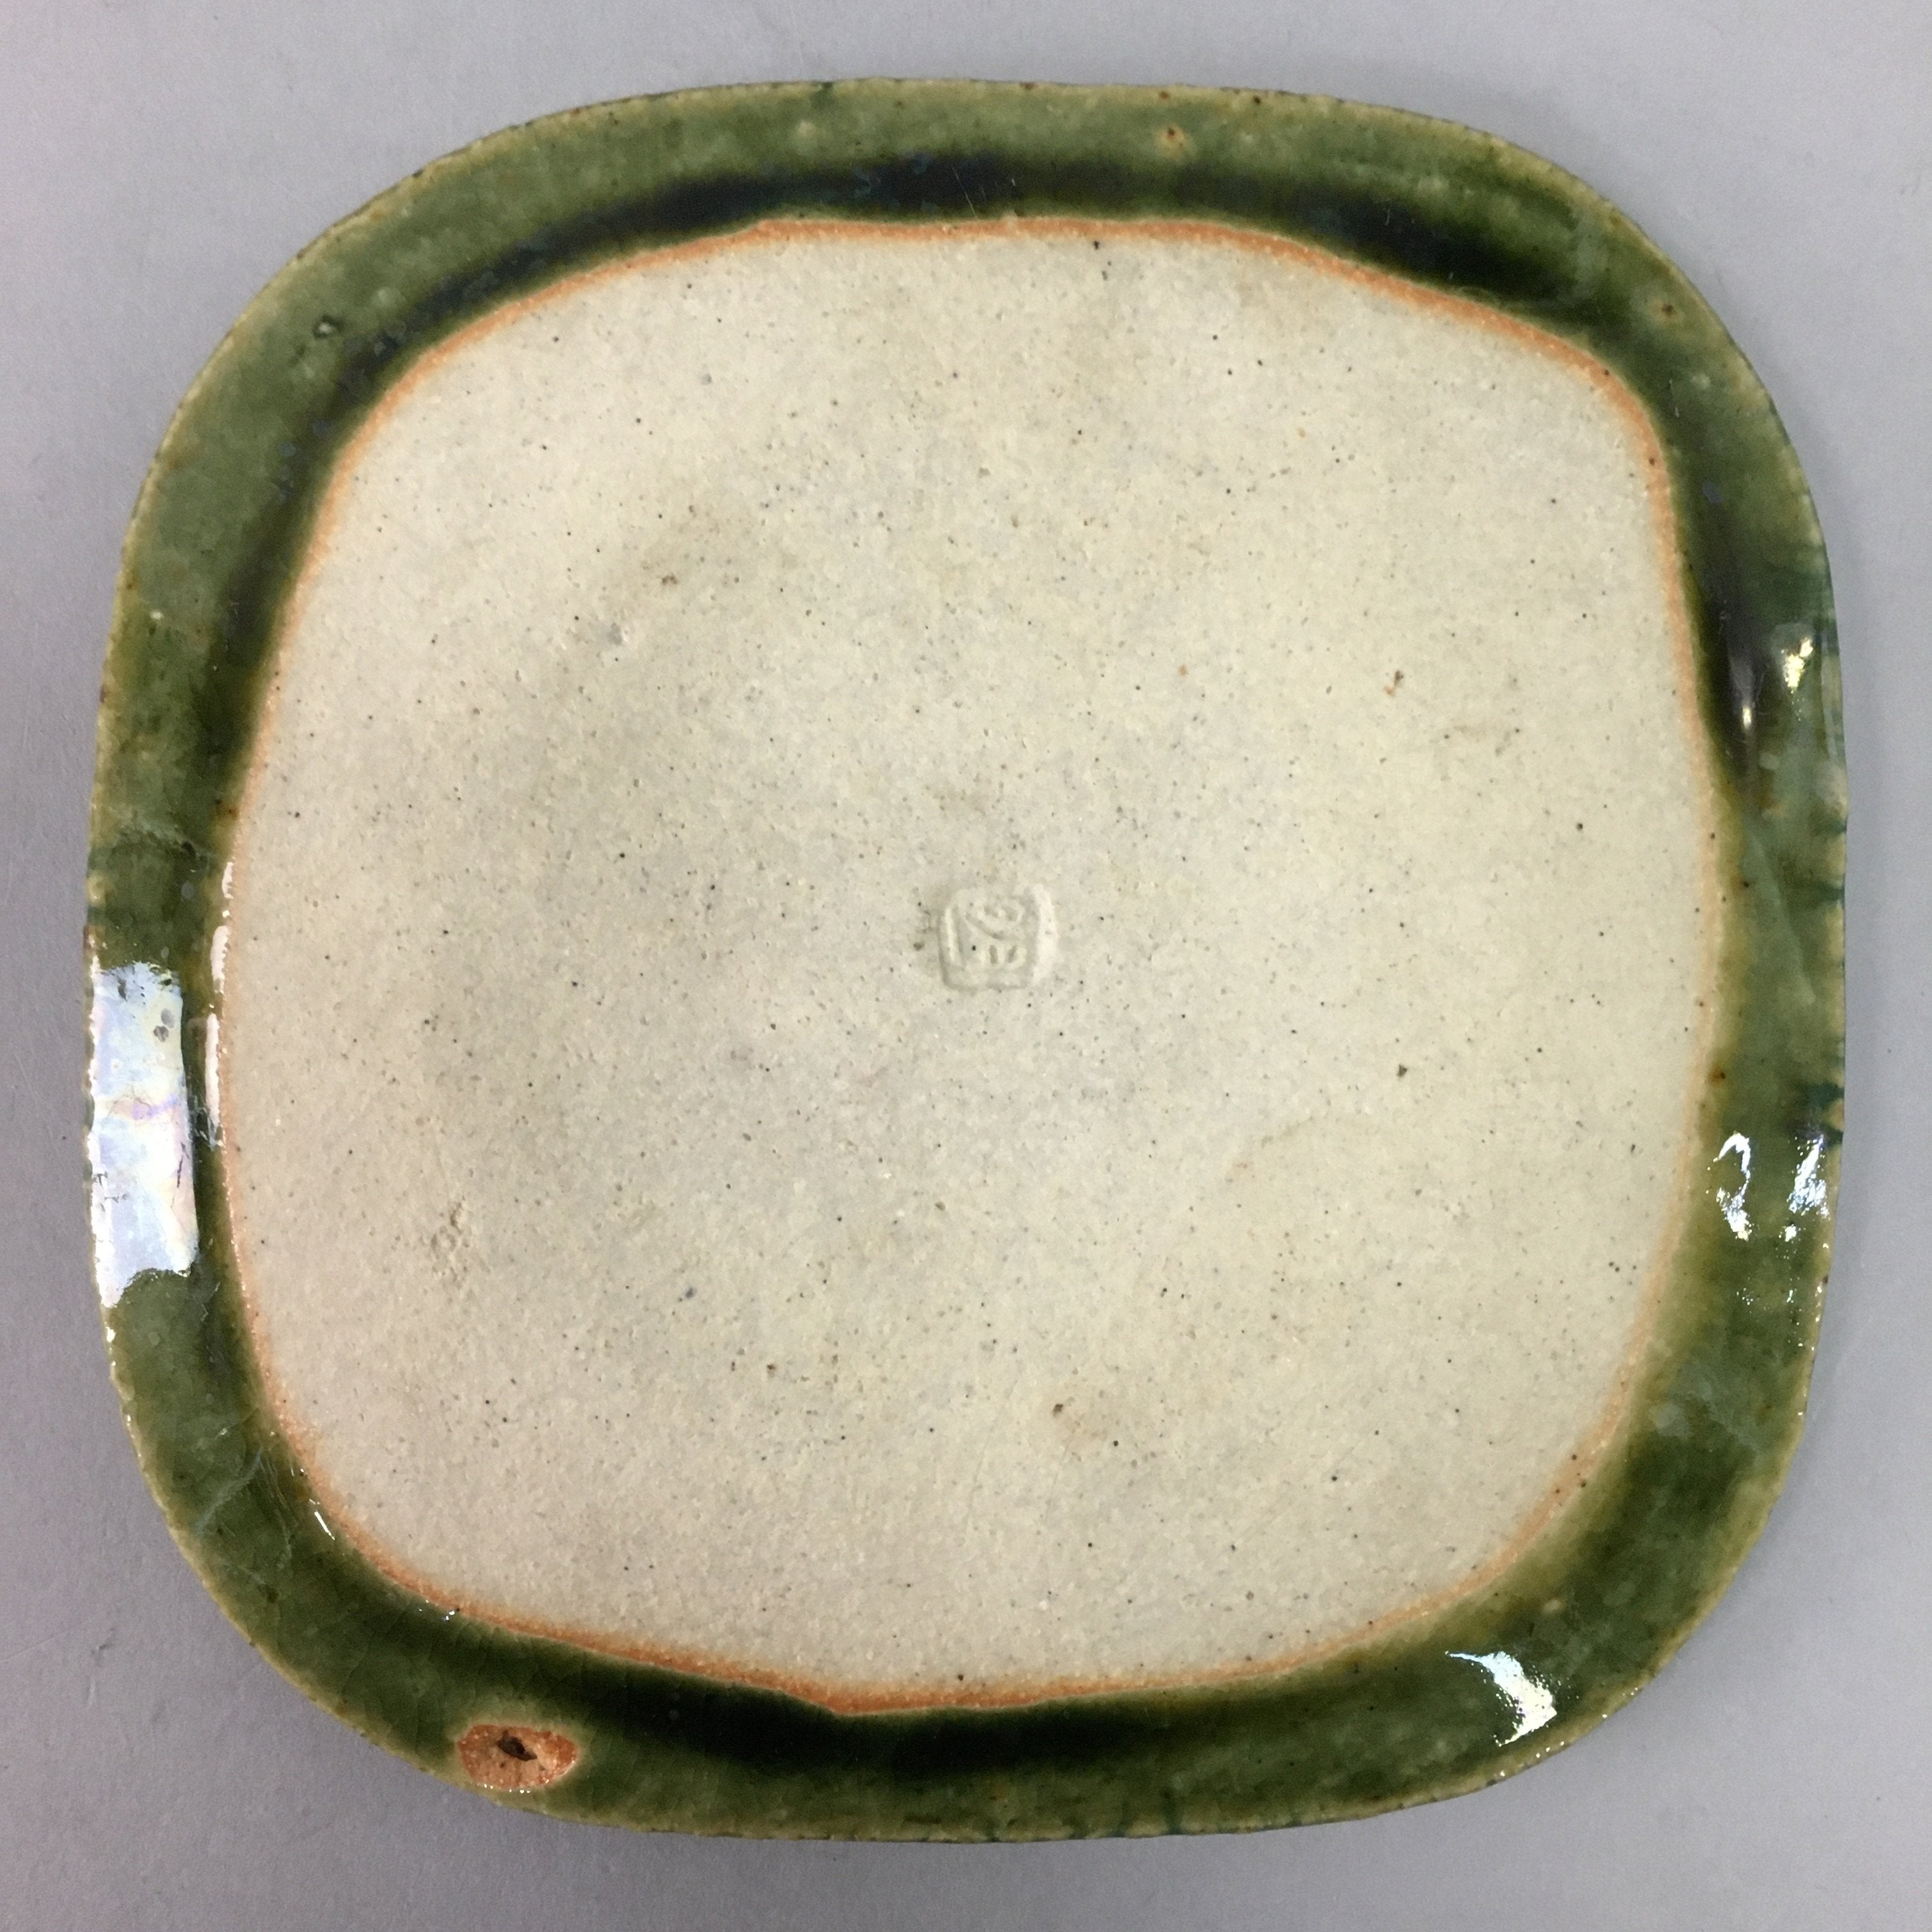 Japanese Ceramic Small Plate Kozara Oribe ware Vtg Square Pottery PP39